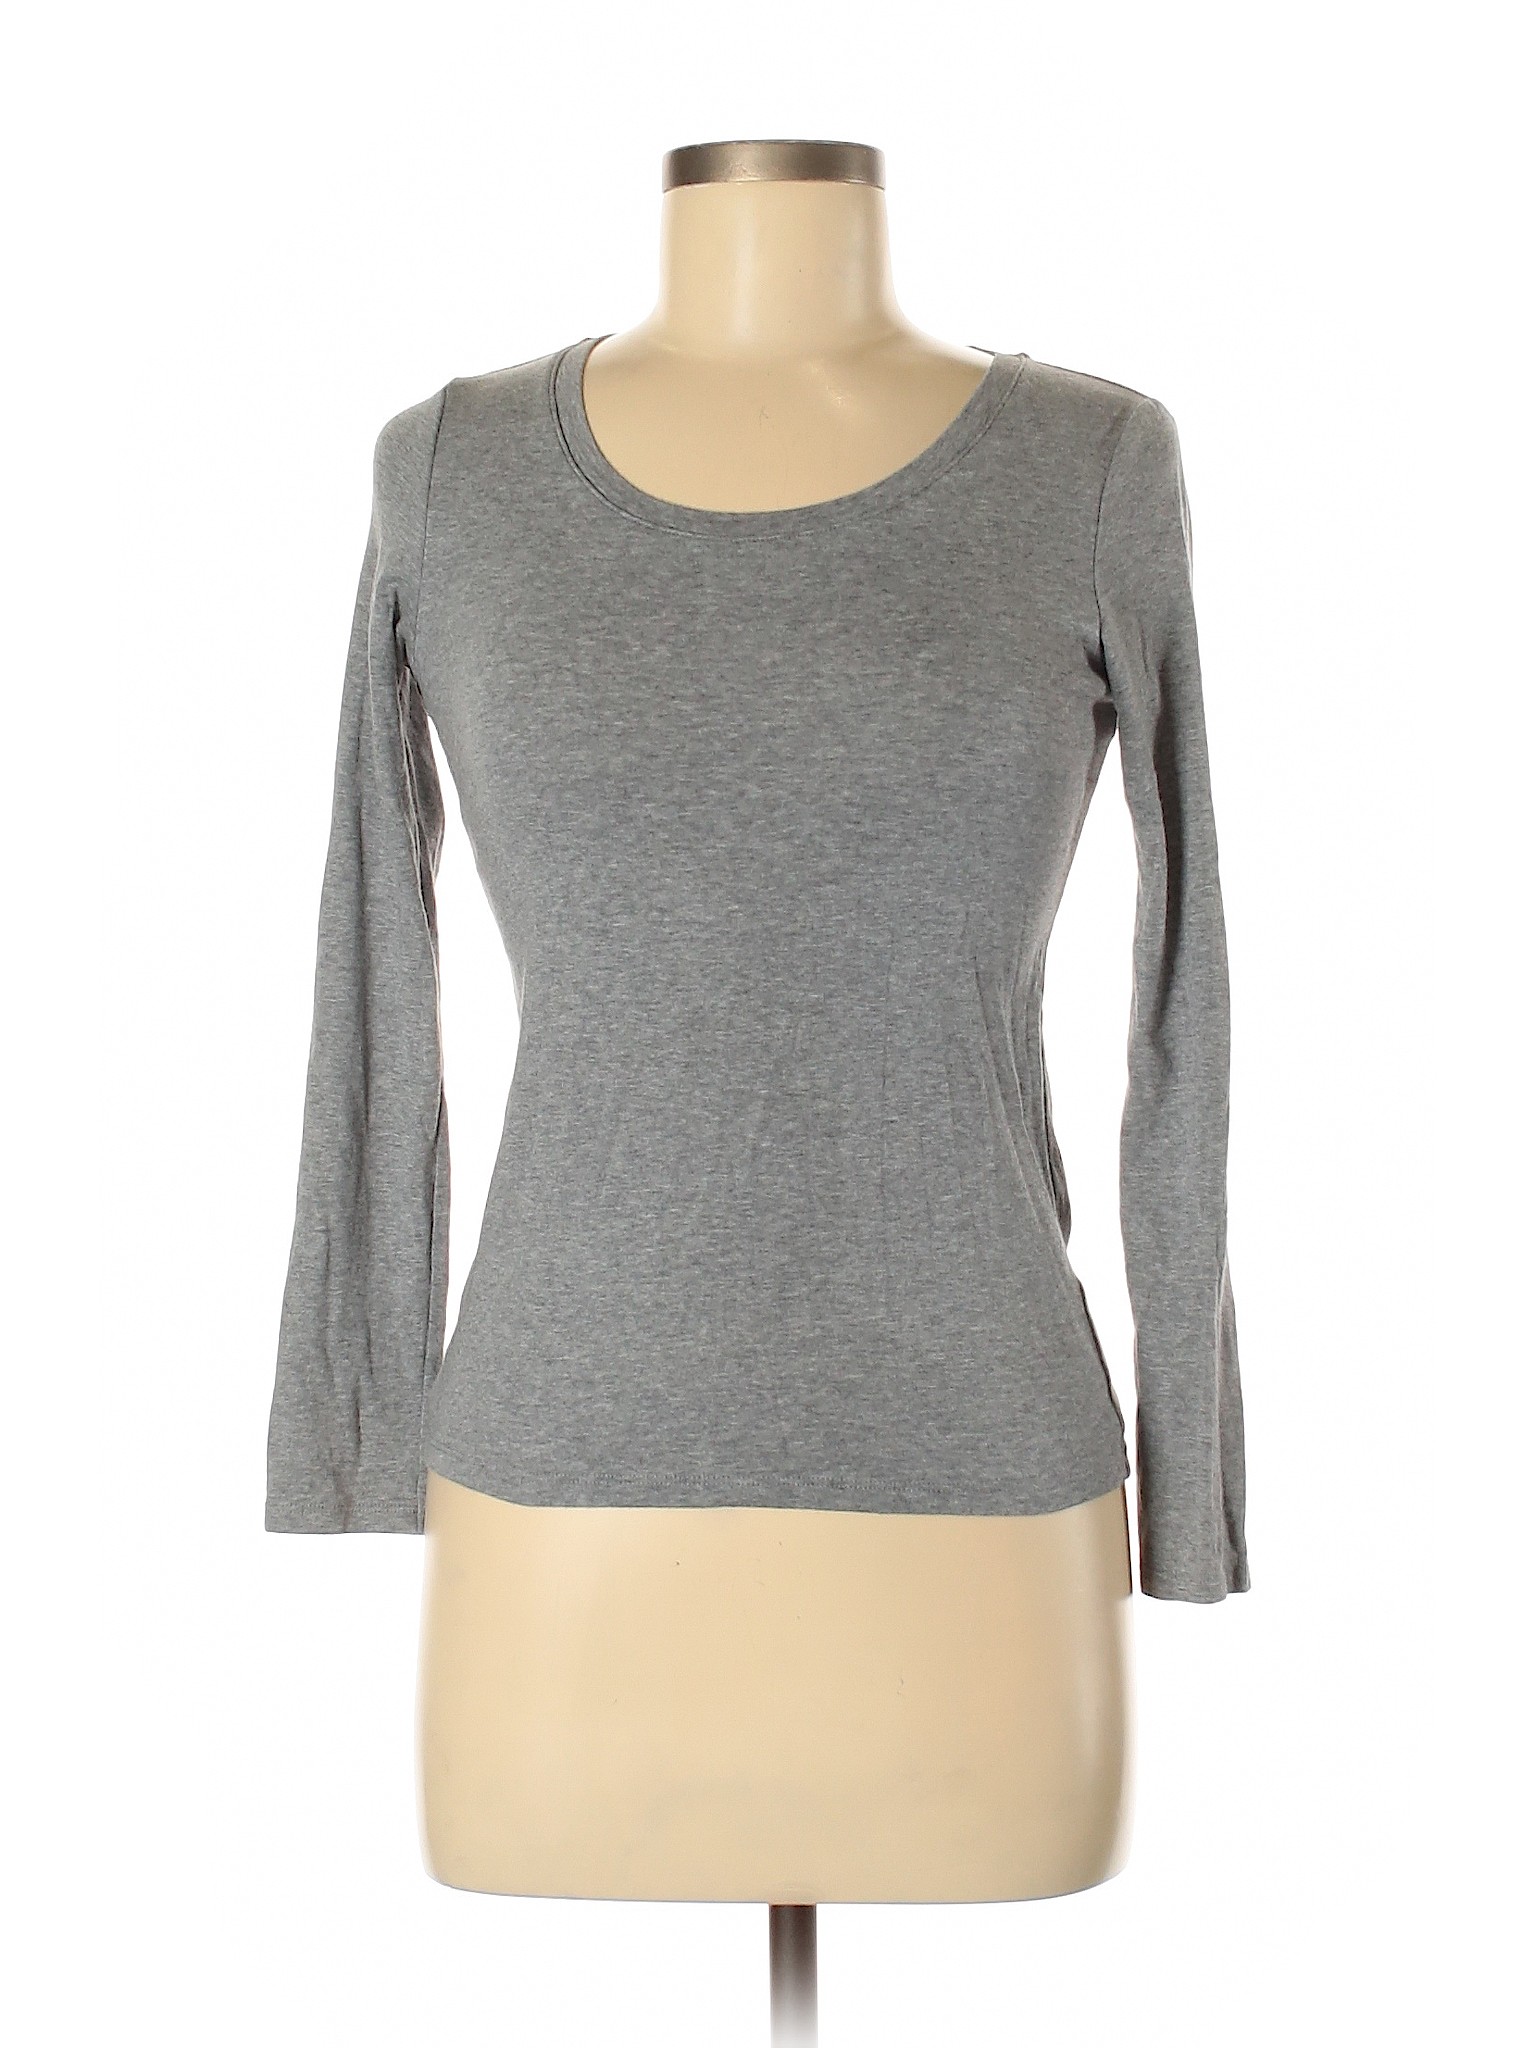 Uniqlo Women Gray Long Sleeve T-Shirt S | eBay